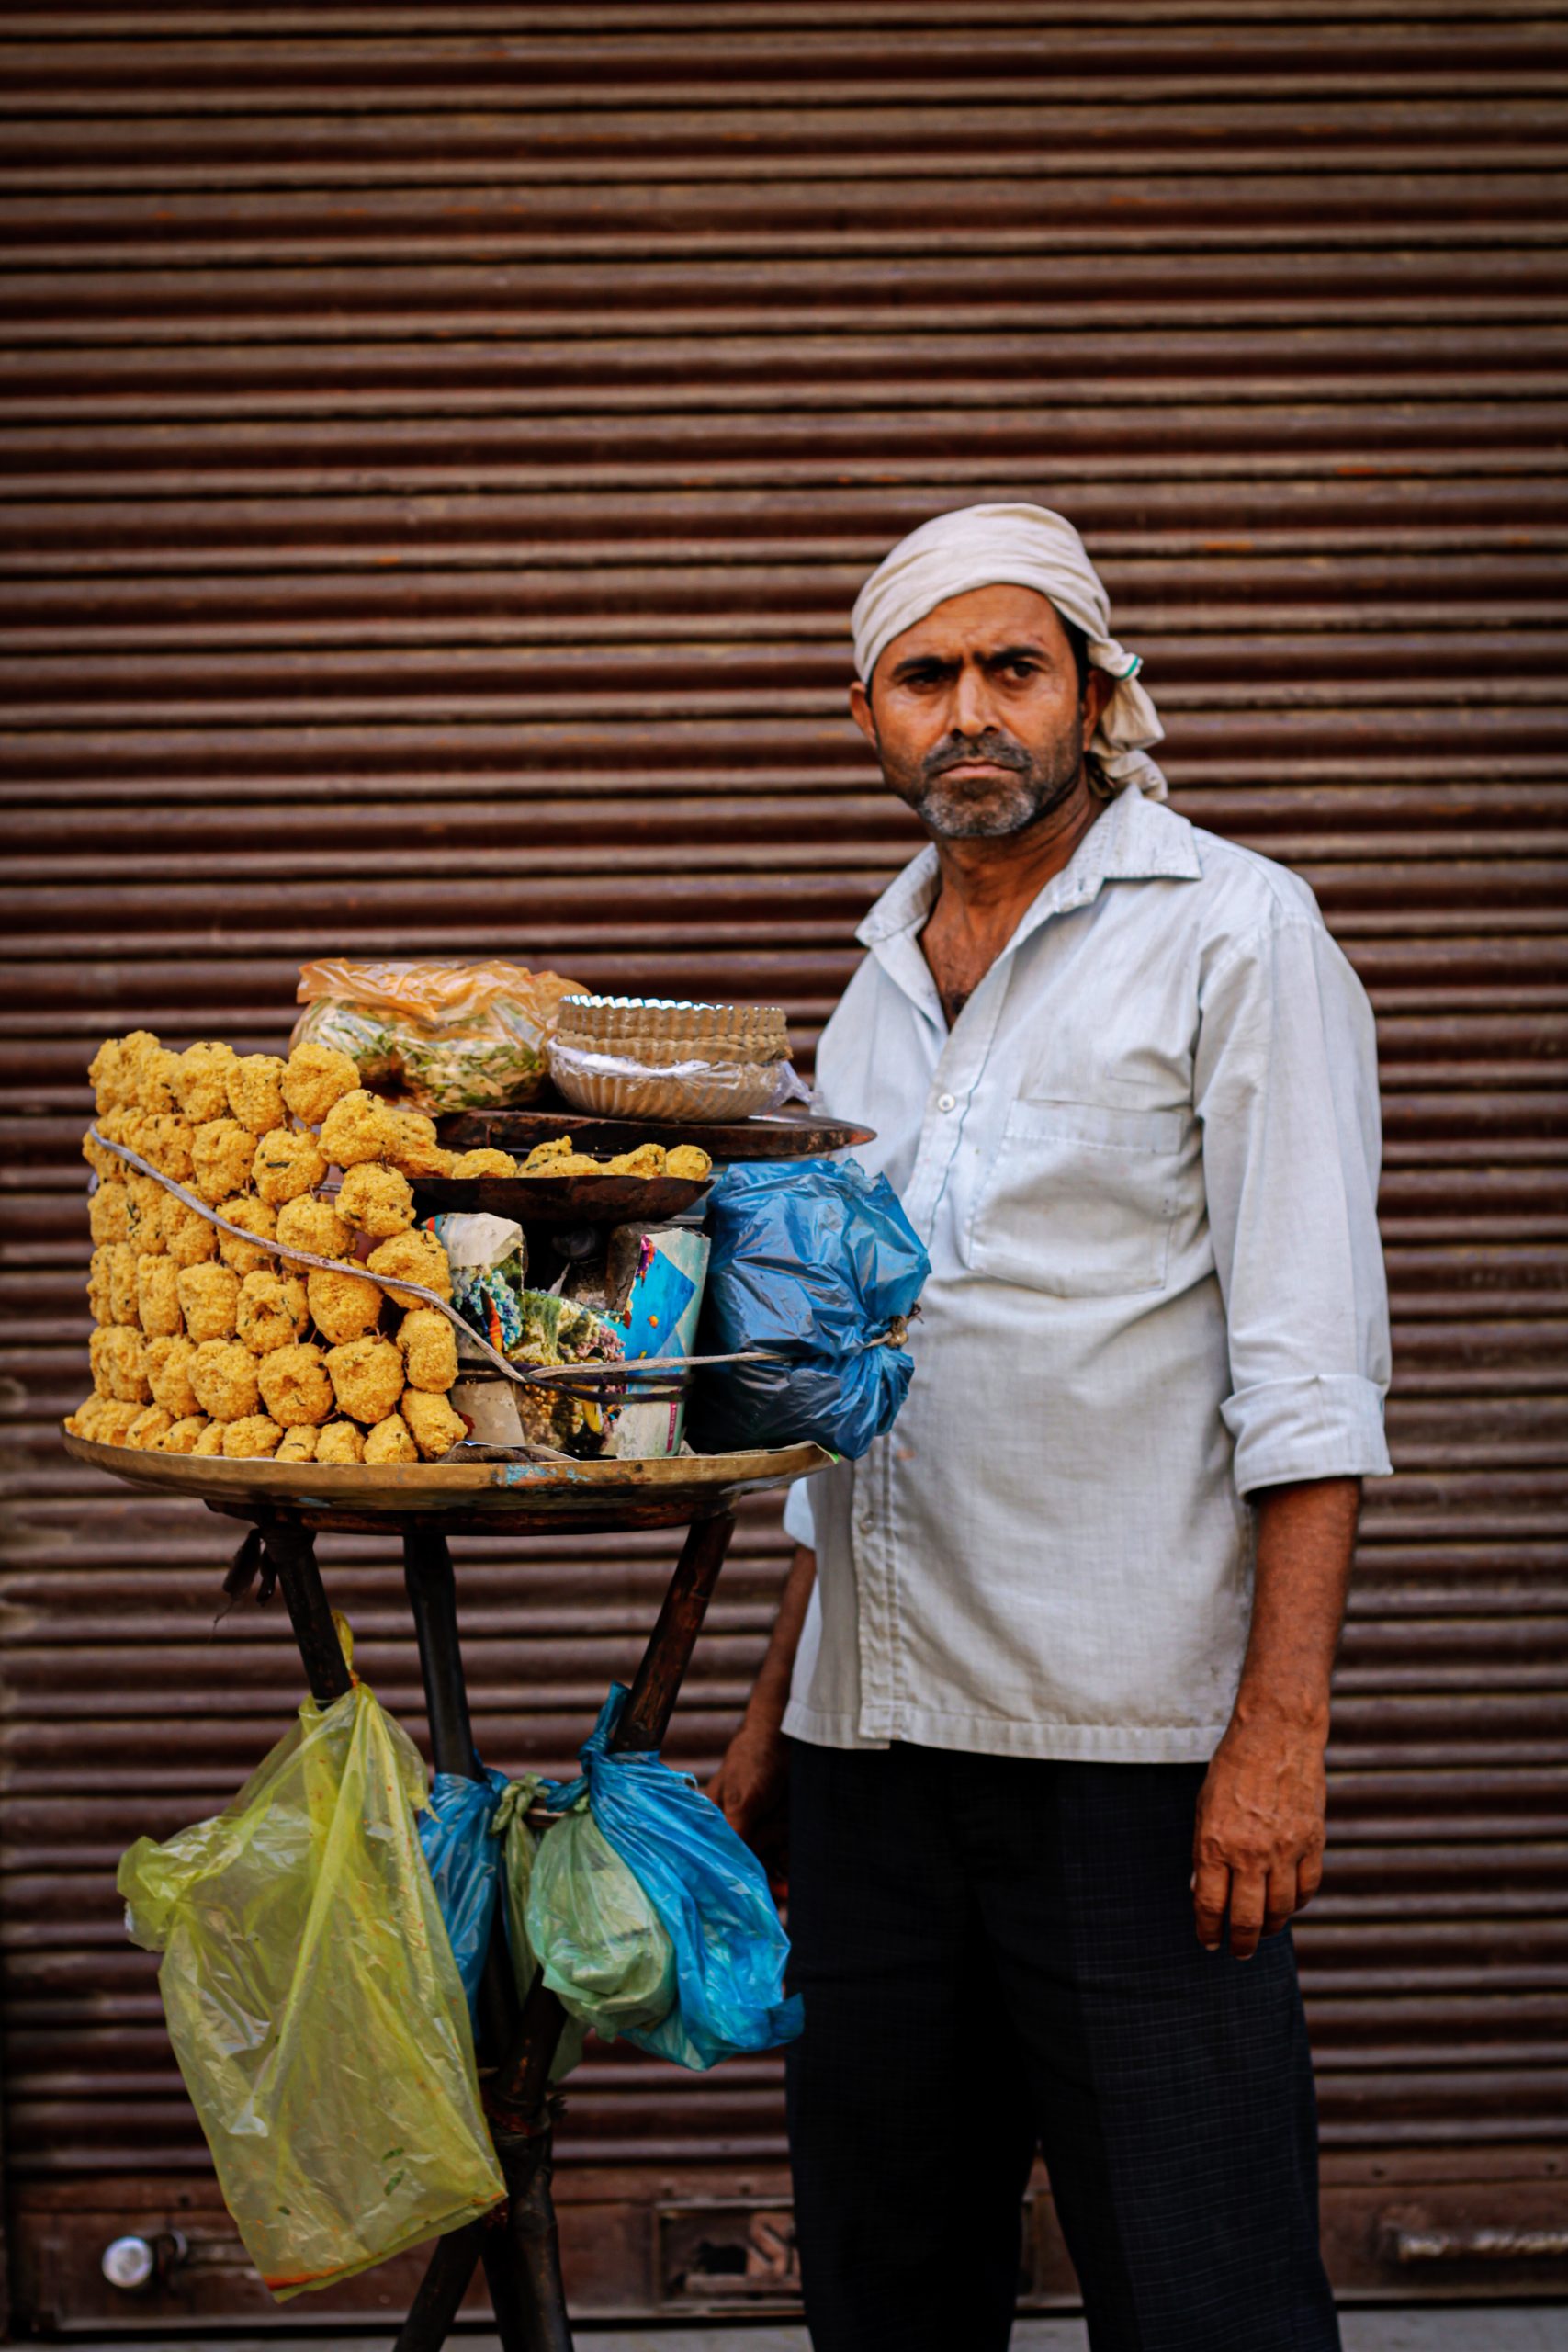 A street vendor selling snacks